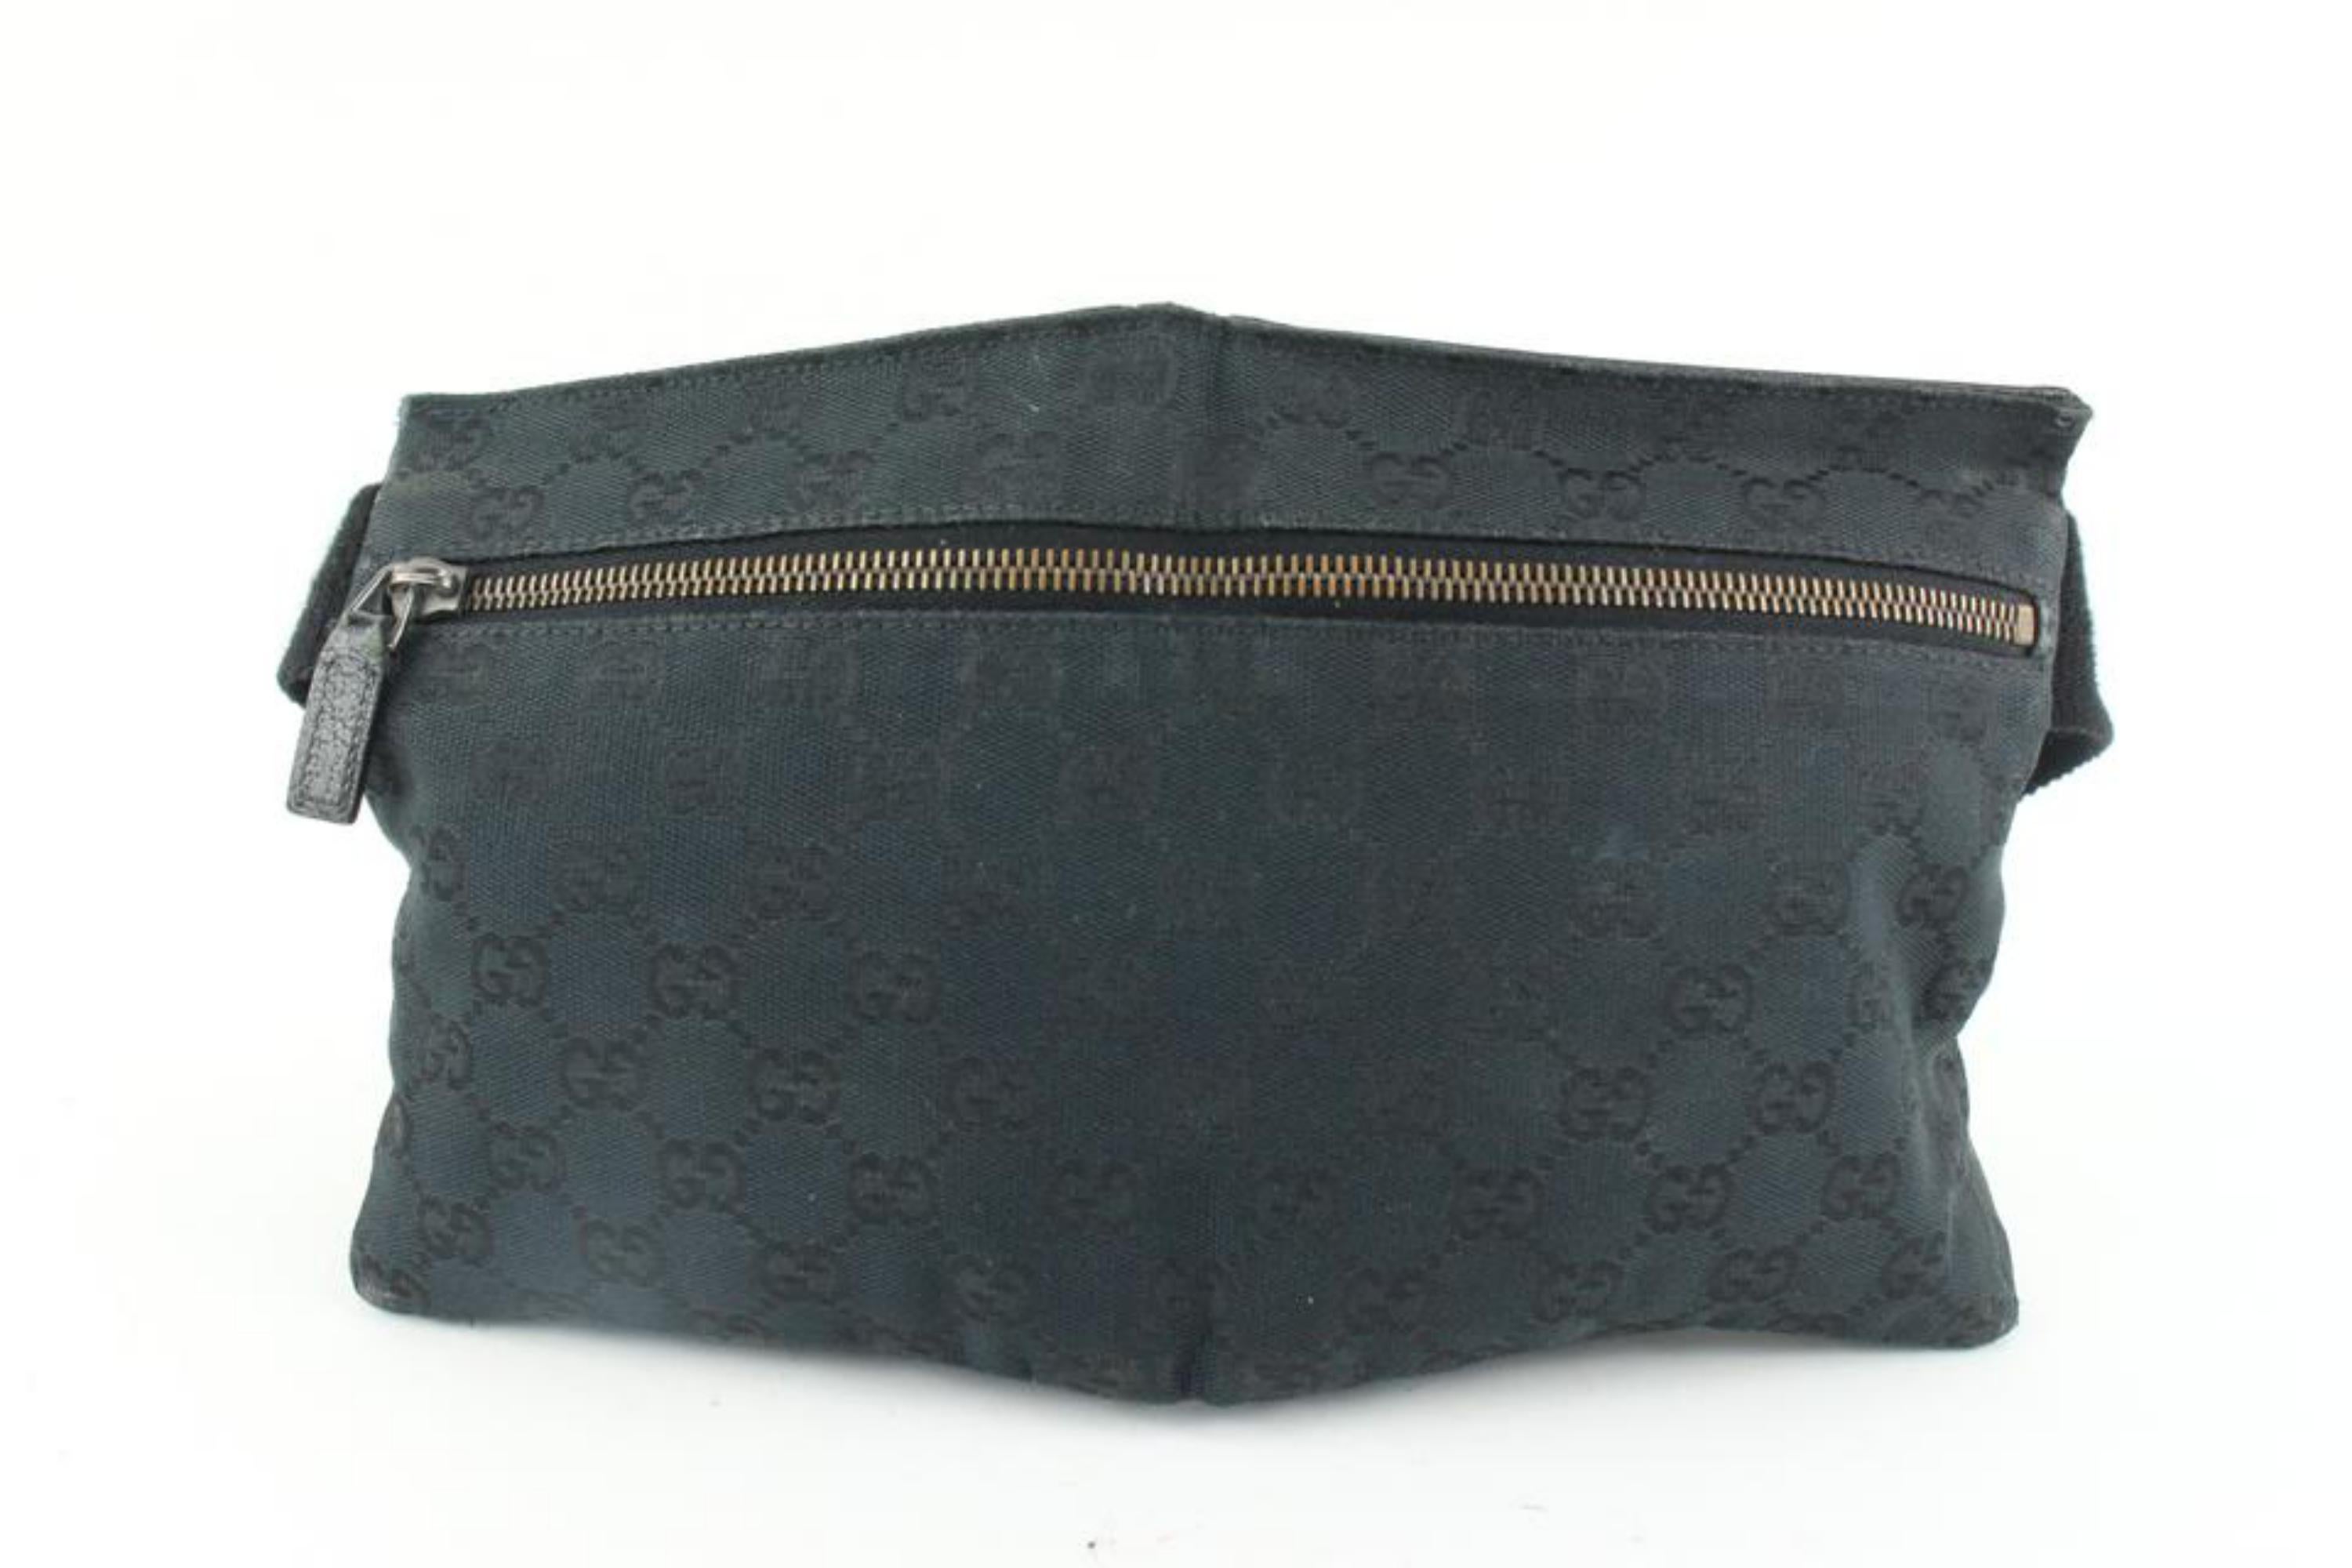 Gucci Black Monogram GG Belt Bag Fanny Pack Waist Pouch 16g29 For Sale 3